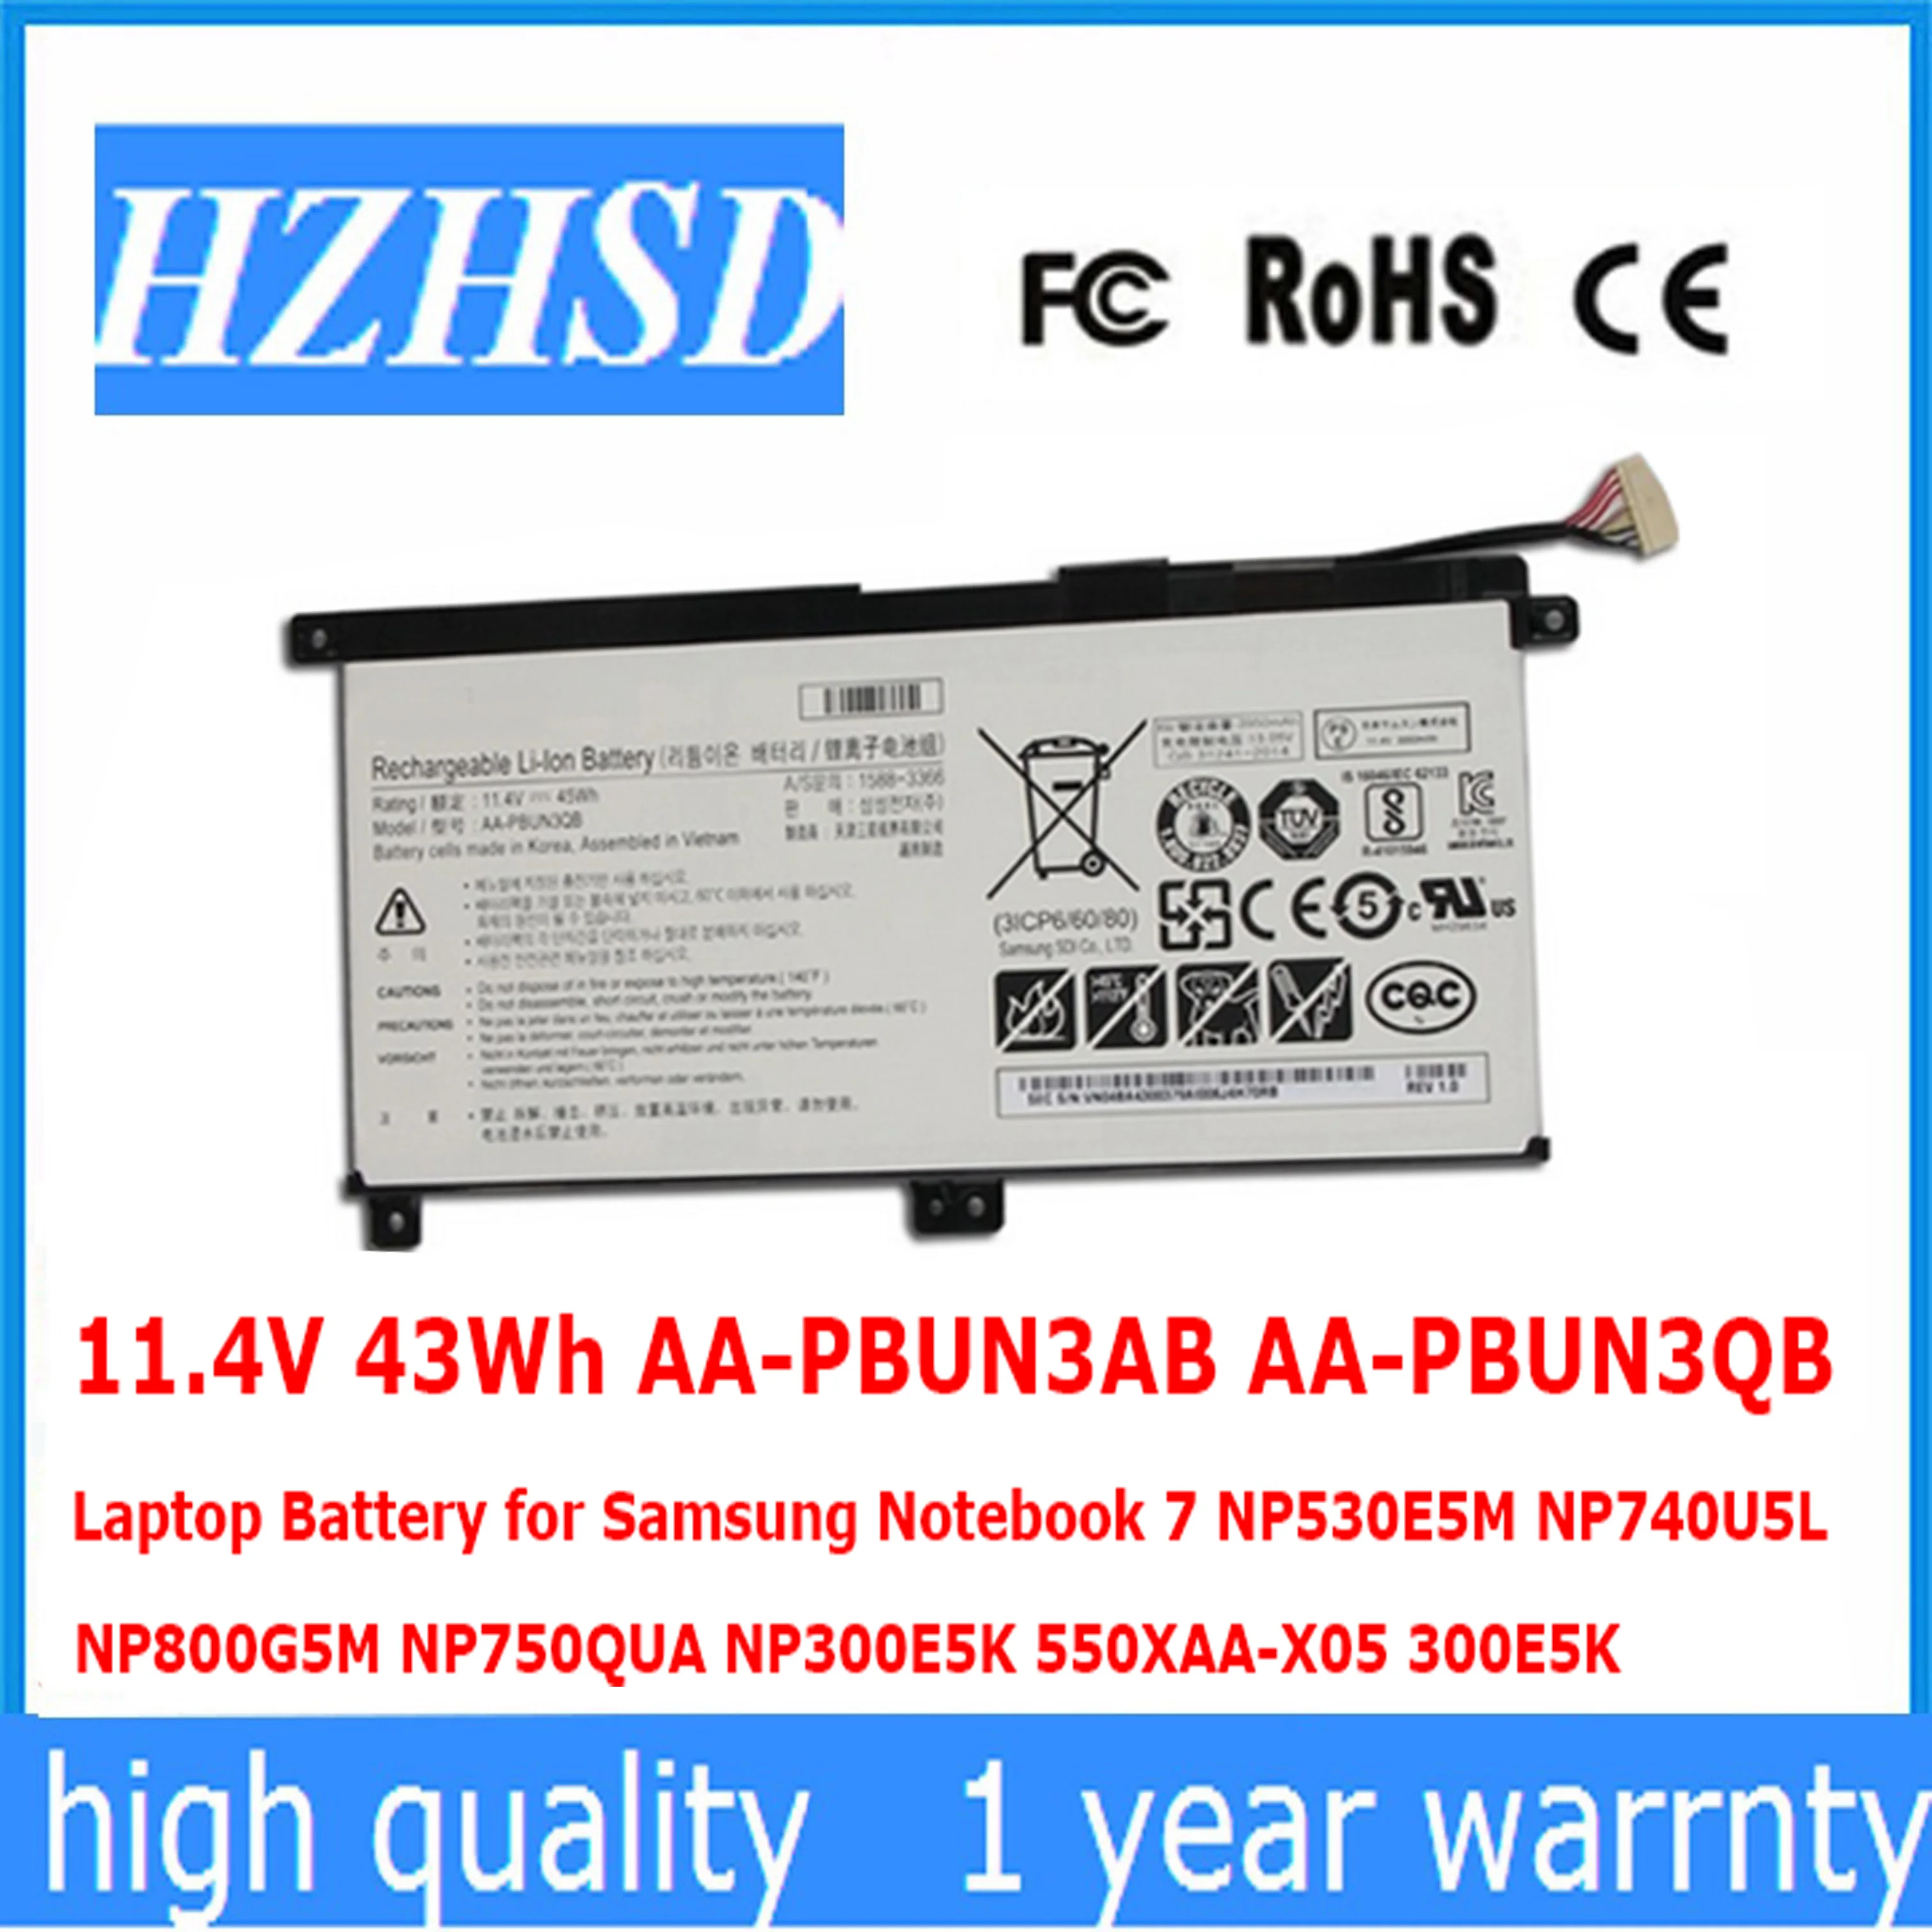 

11.4V 43Wh AA-PBUN3AB AA-PBUN3QB Laptop Battery for Samsung Notebook 7 NP530E5M NP740U5L NP800G5M NP750QUA NP300E5K 550XAA-X05